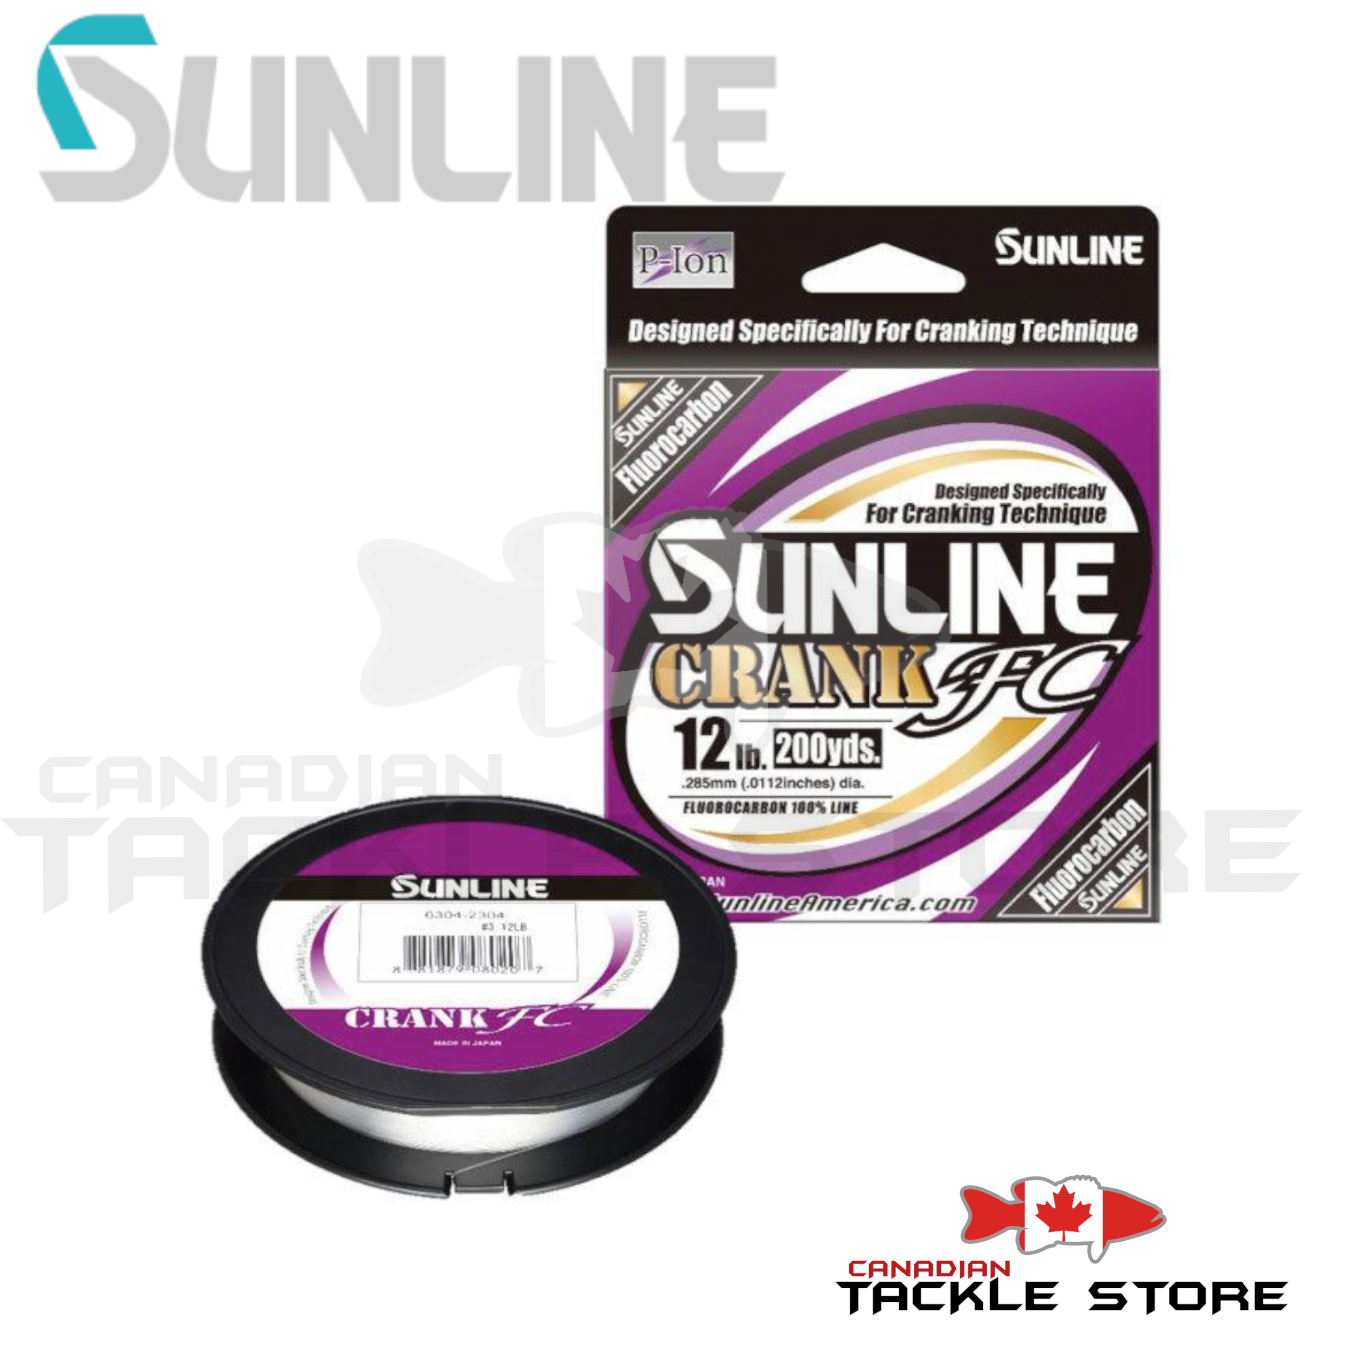 Sunline Crank FC 10 lb / 200 yards